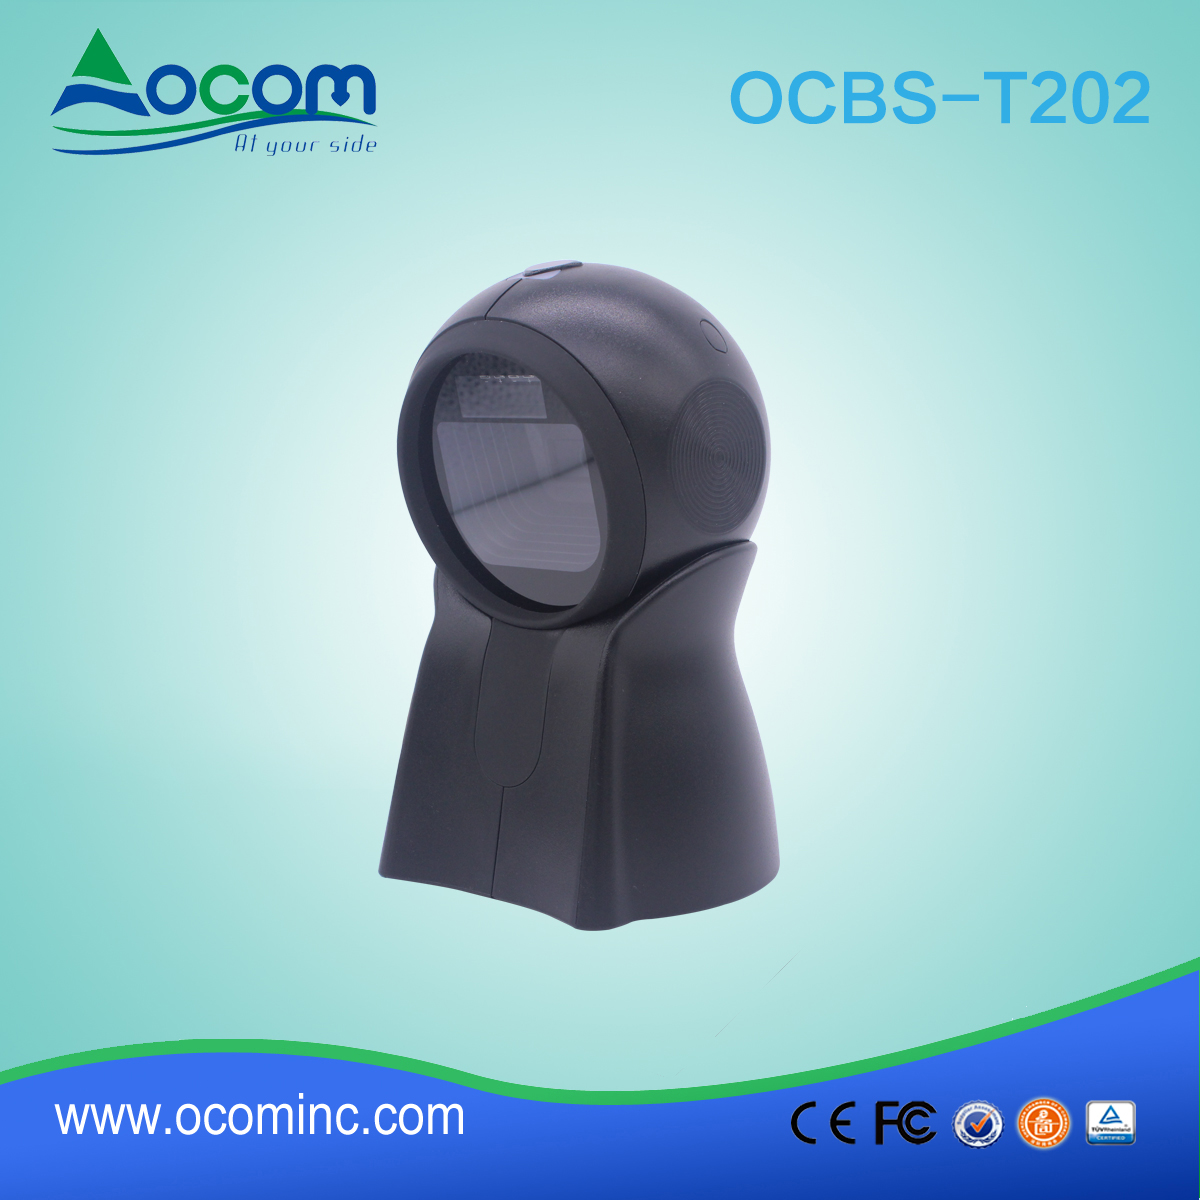 OCBS-T202: Cina economici supermercato 2D Barcode scanner macchina